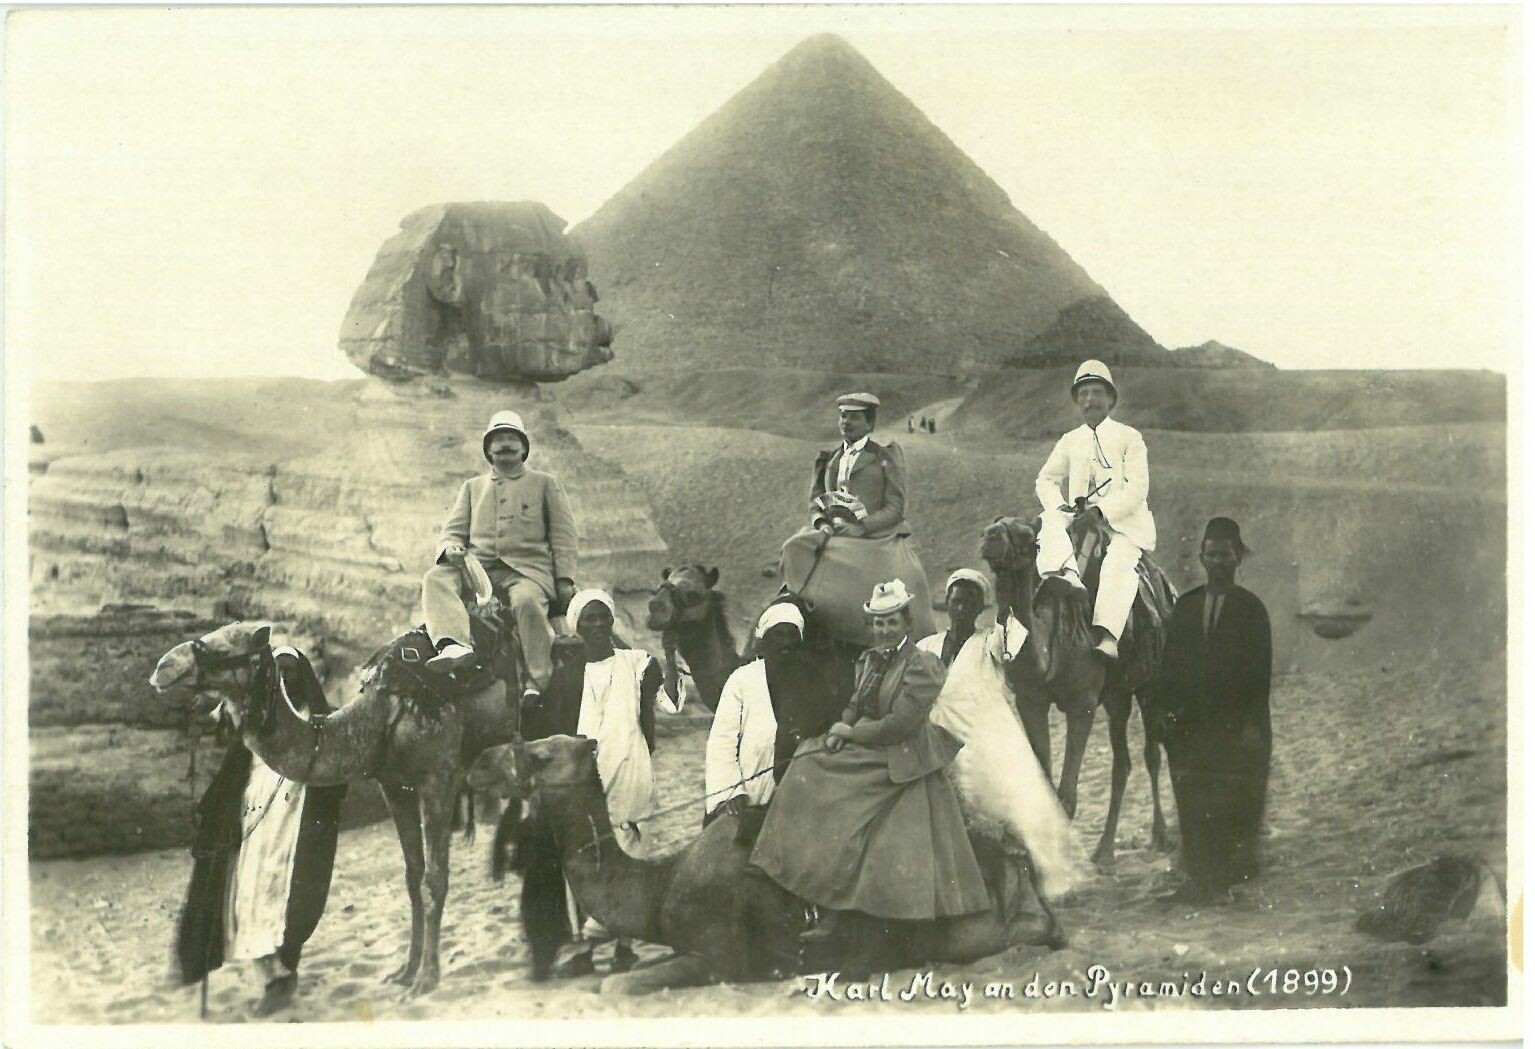 Karl May Karte, Karl May an den Pyramiden 1899 (Karl-May-Museum gGmbH RR-R)